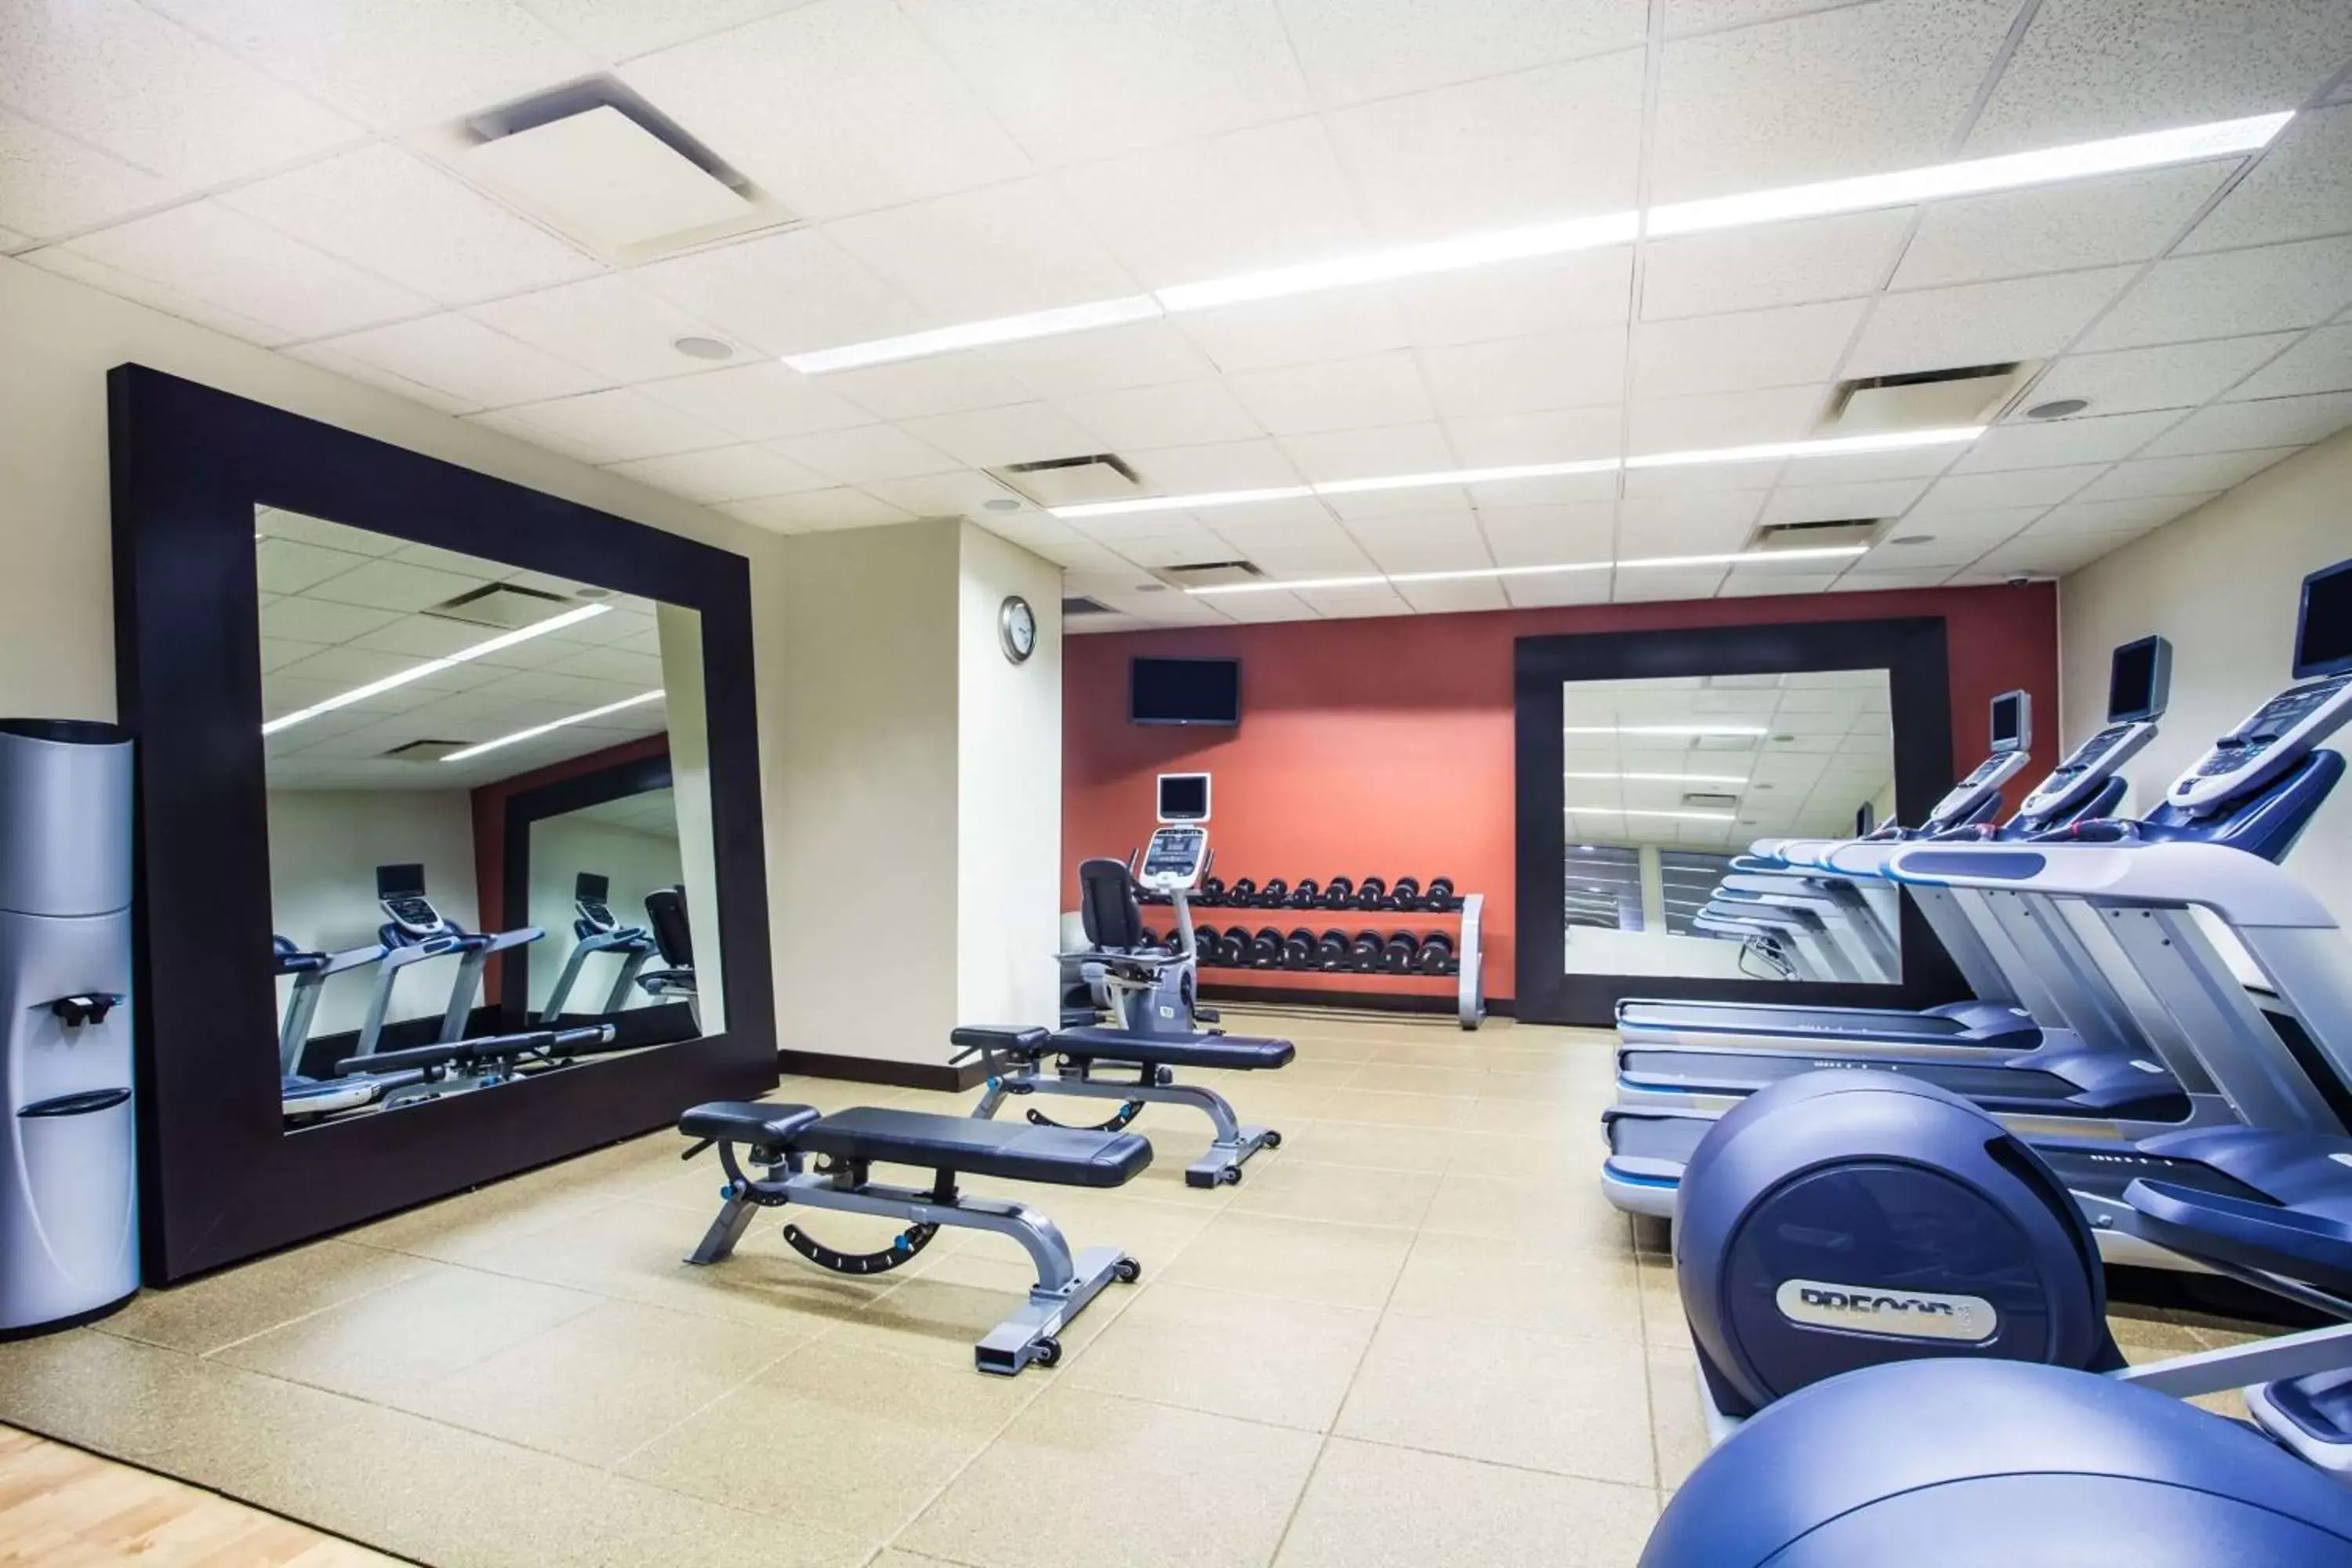 Fitness centre/facilities, Fitness Center/Facilities in Hilton Garden Inn West 35th Street